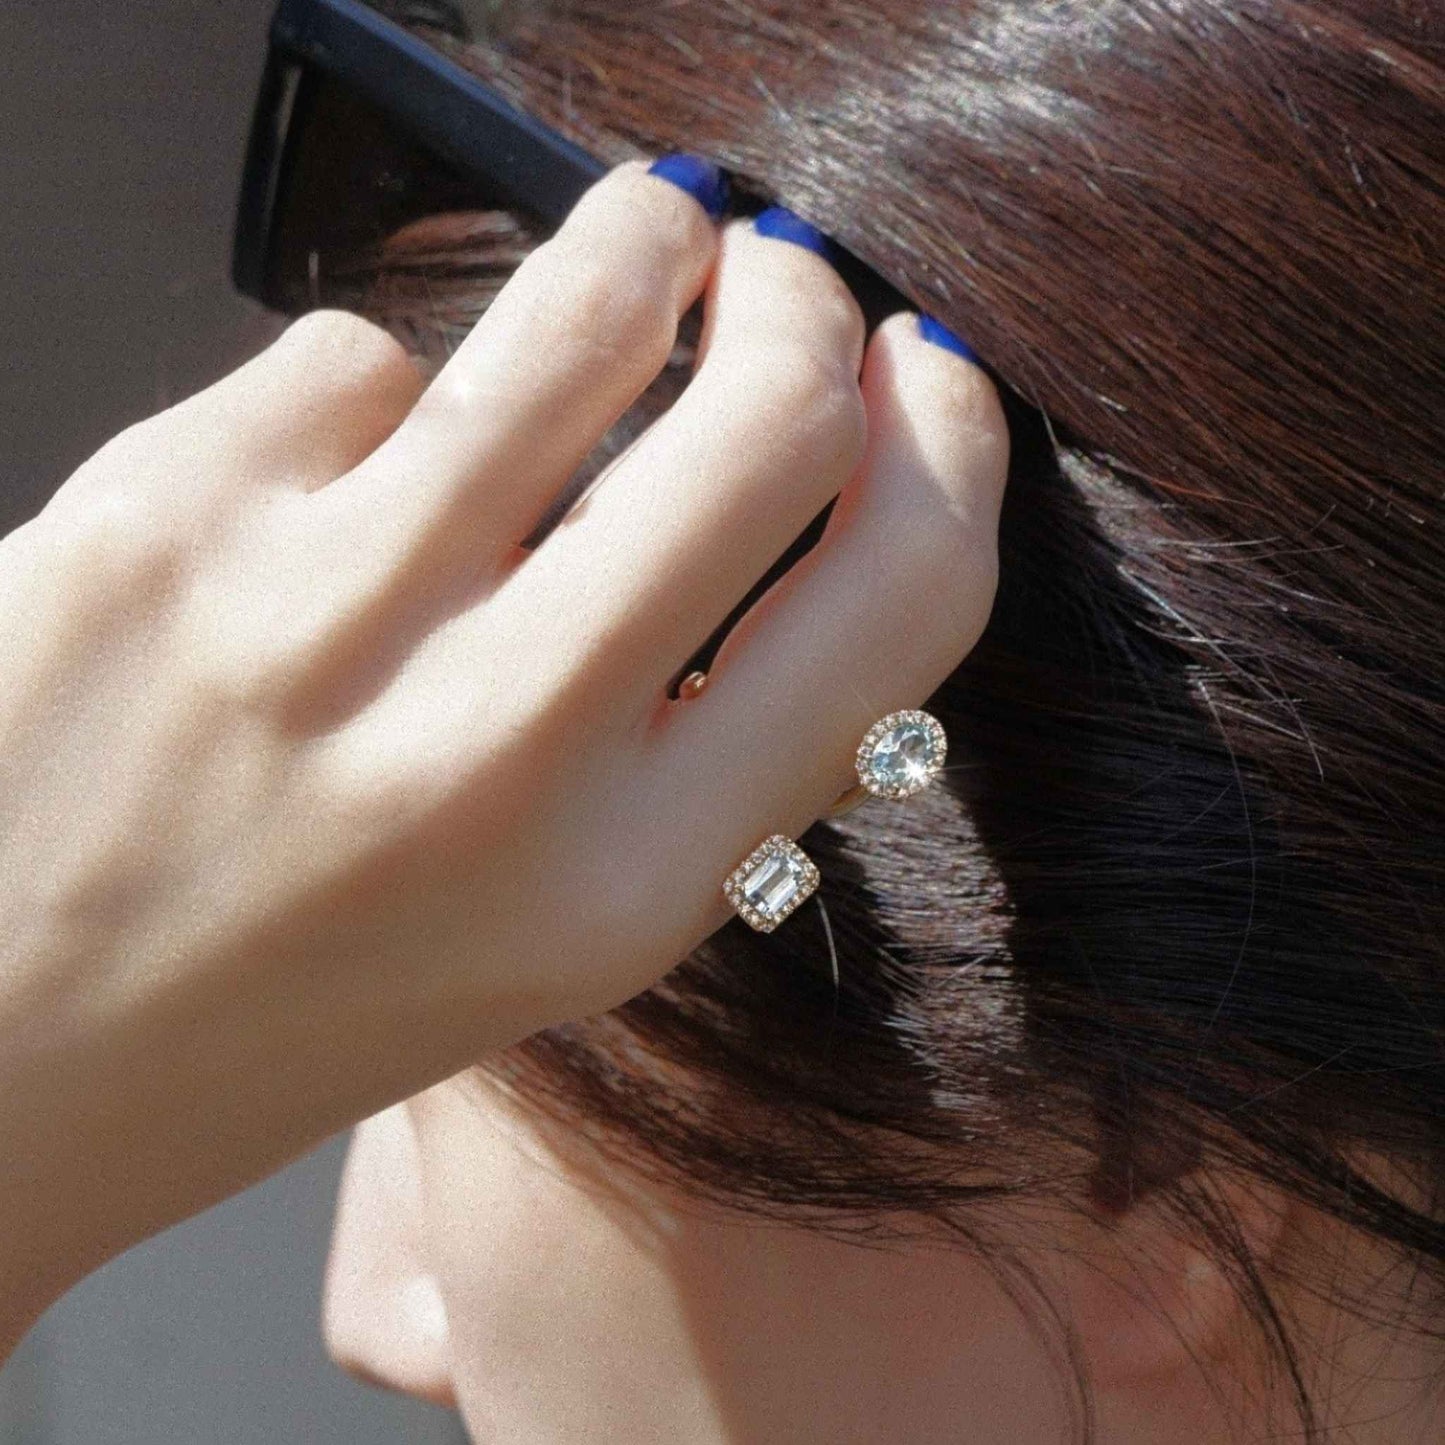 new basic collection / aquamarine diamond double halo ring Pt950